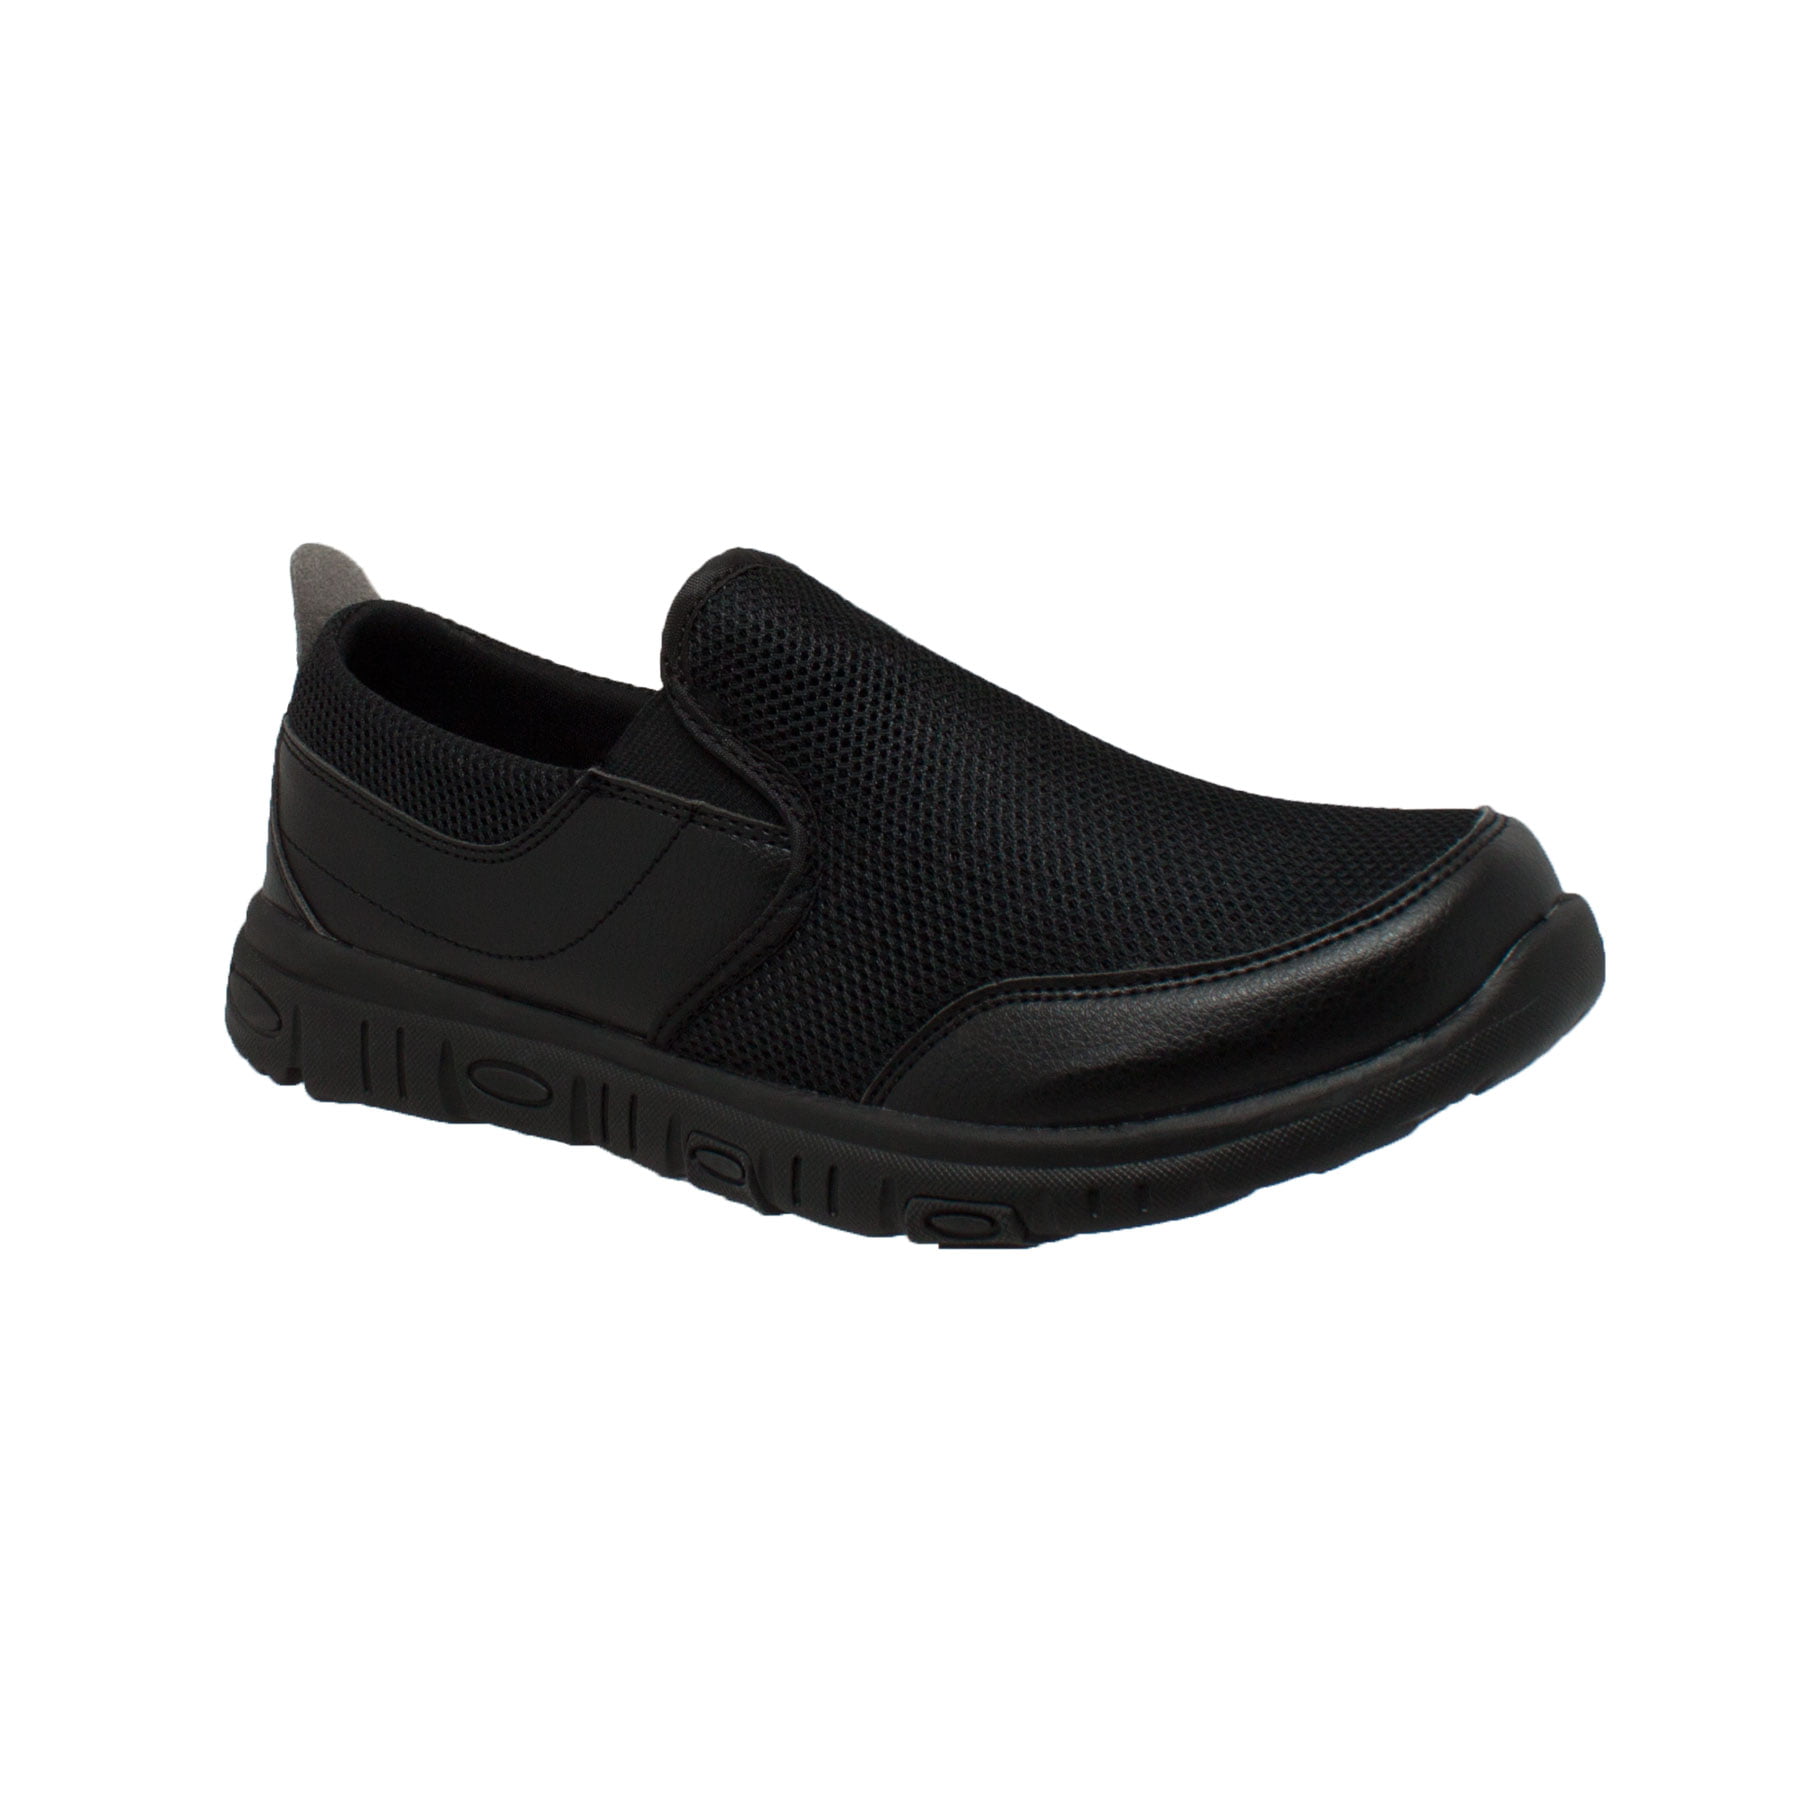 AdTec - Adtec Men's Comfort Stride Shoe, Black - 11 M - Walmart.com ...